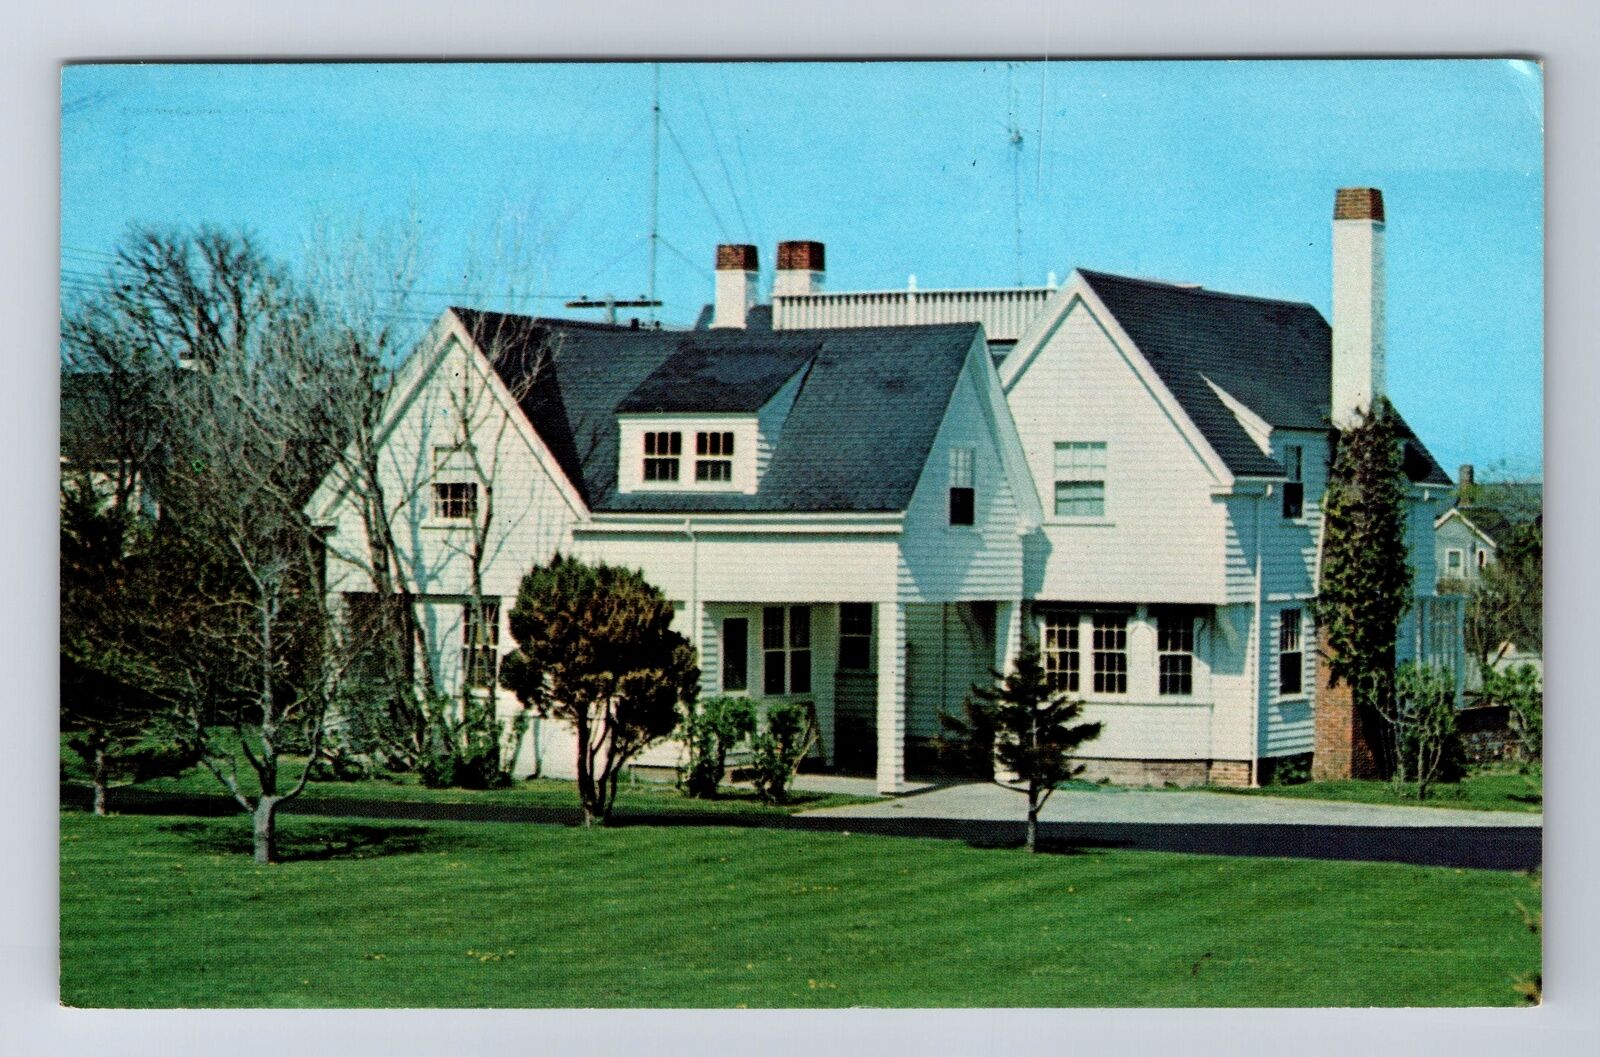 Hyannis Port MA-Massachusetts, Summer Home John F Kennedy, Vintage Postcard